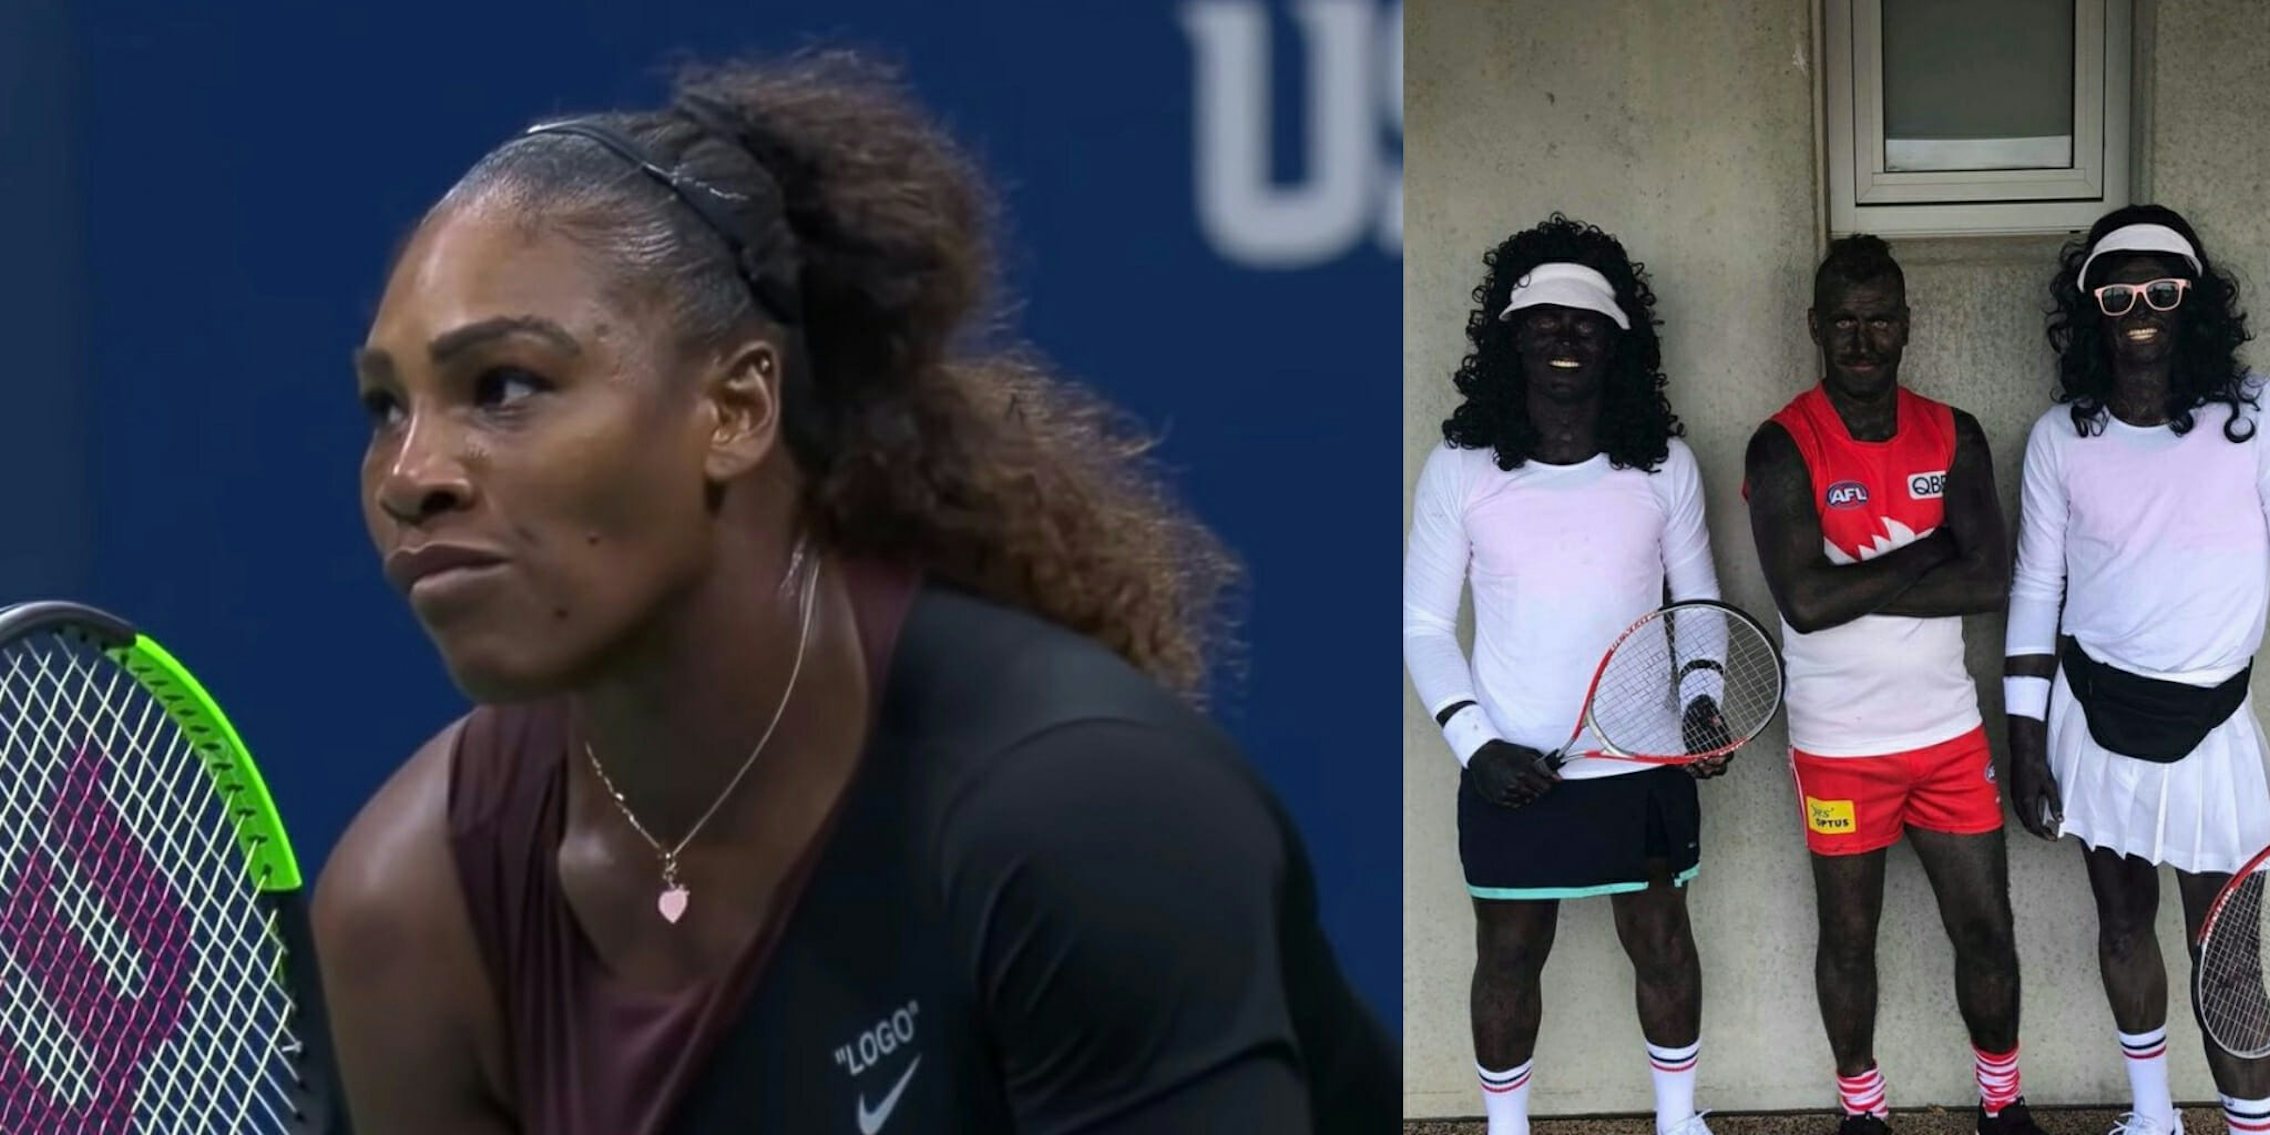 Serena Williams and Australian football players wearing blackface.